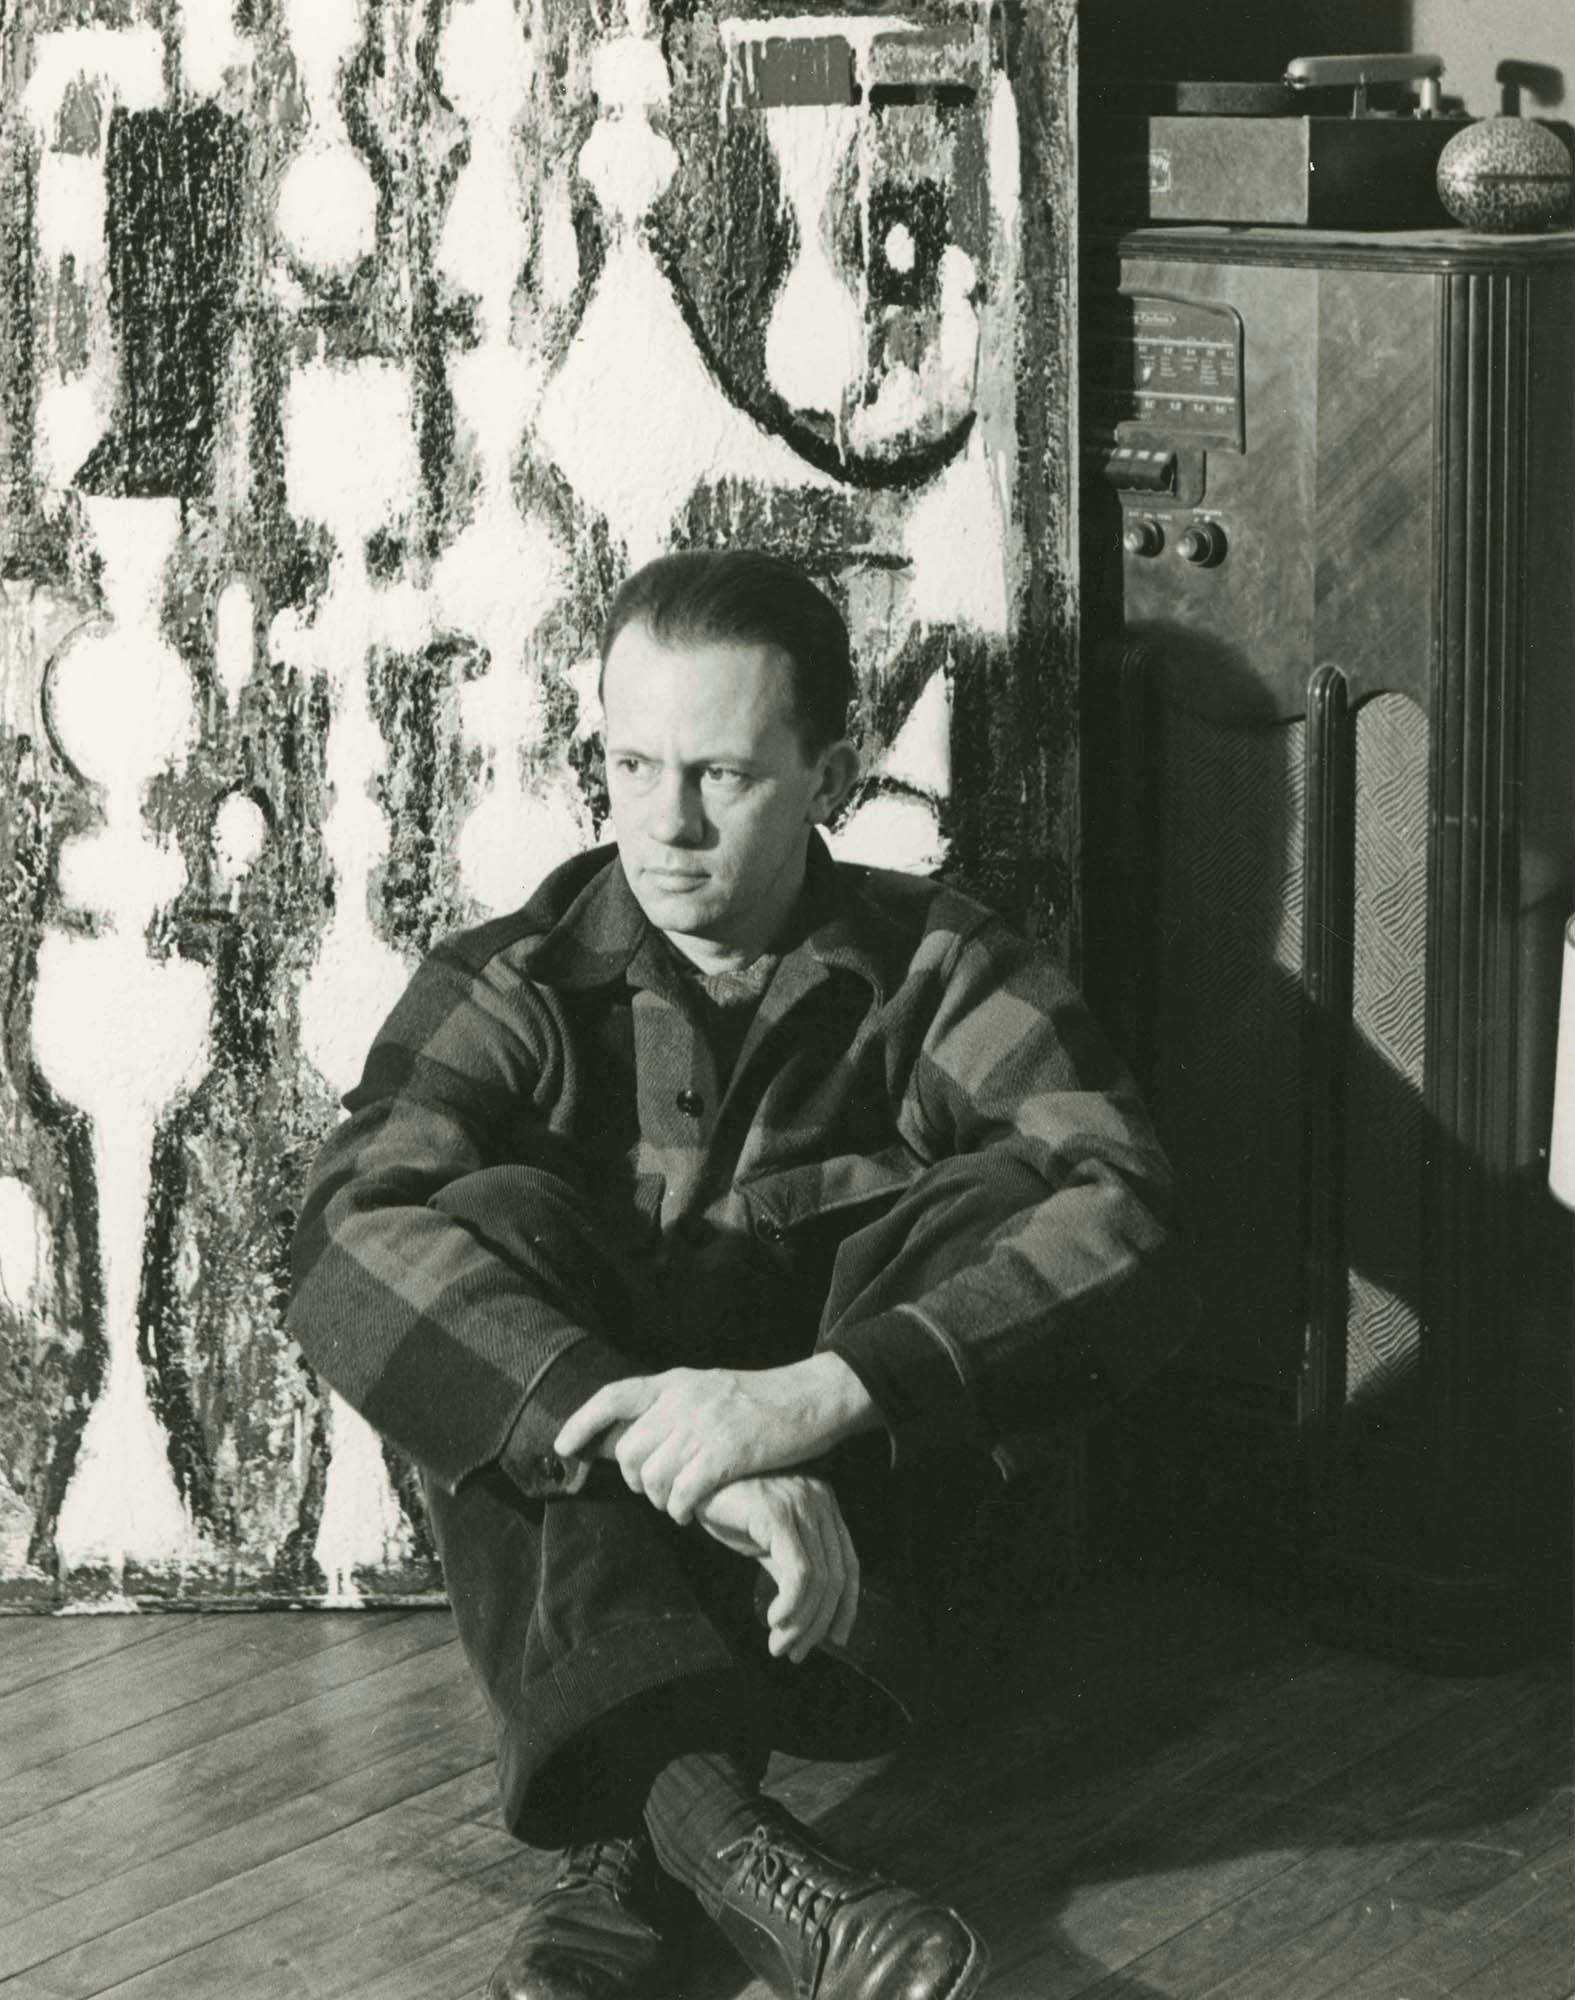 Richard Pousette-Dart, Self-portrait, Sloatsburg, NY, ca. 1953 – The Richard Pousette-Dart Foundation